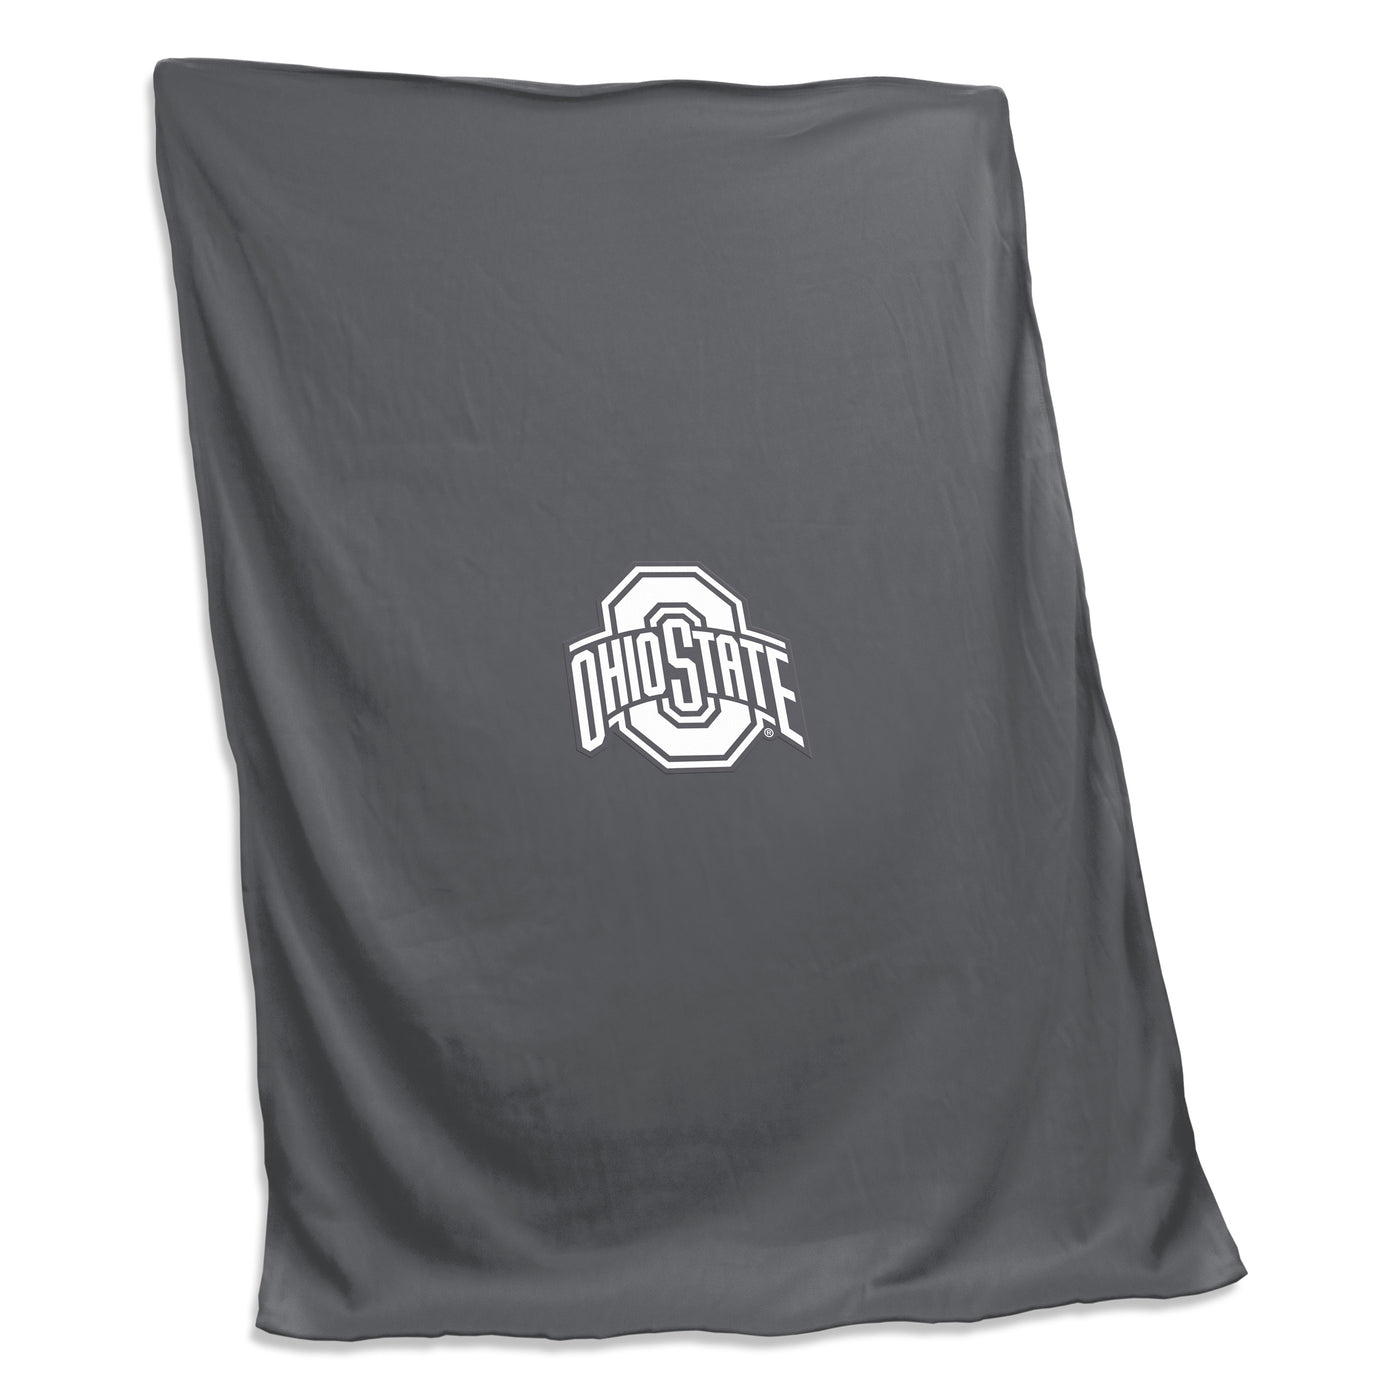 Ohio State Charcoal Sweatshirt Blanket (Screened)